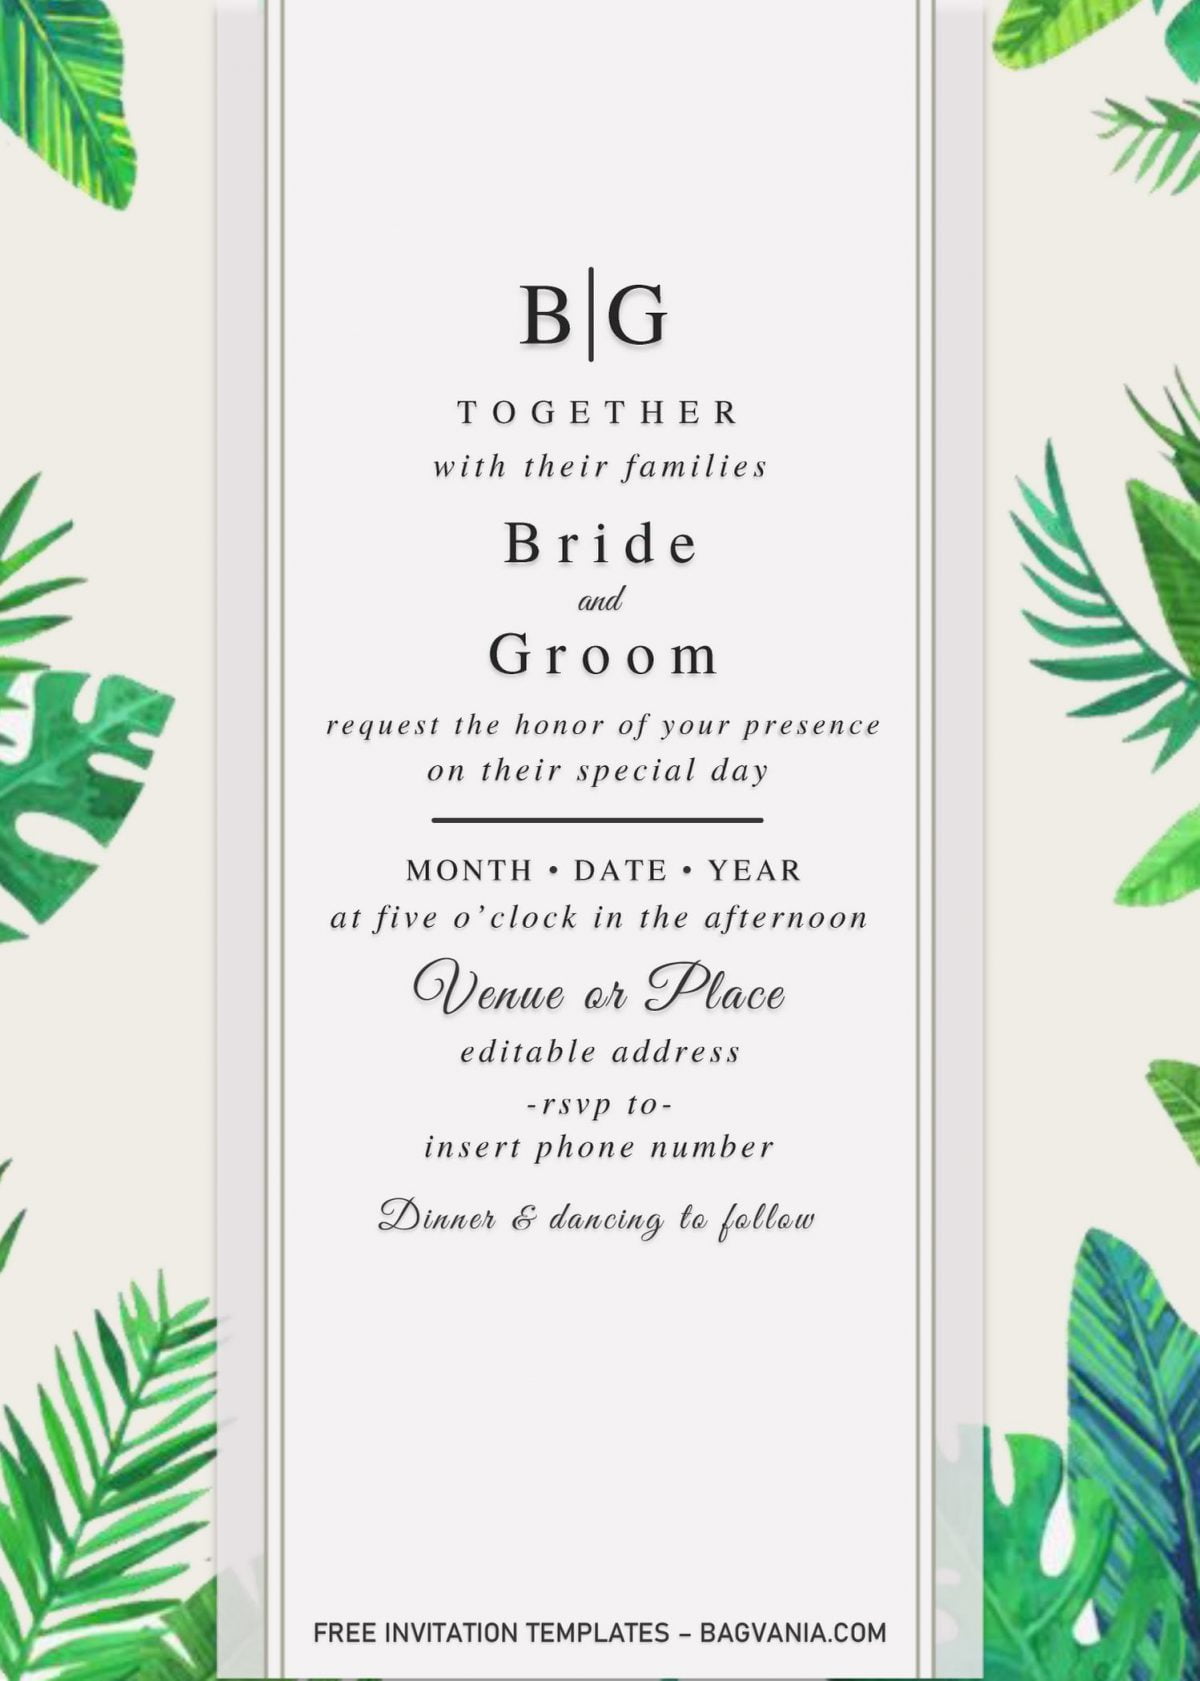 Summer Garden Wedding Invitation Templates - Editable With MS Word and has portrait orientation